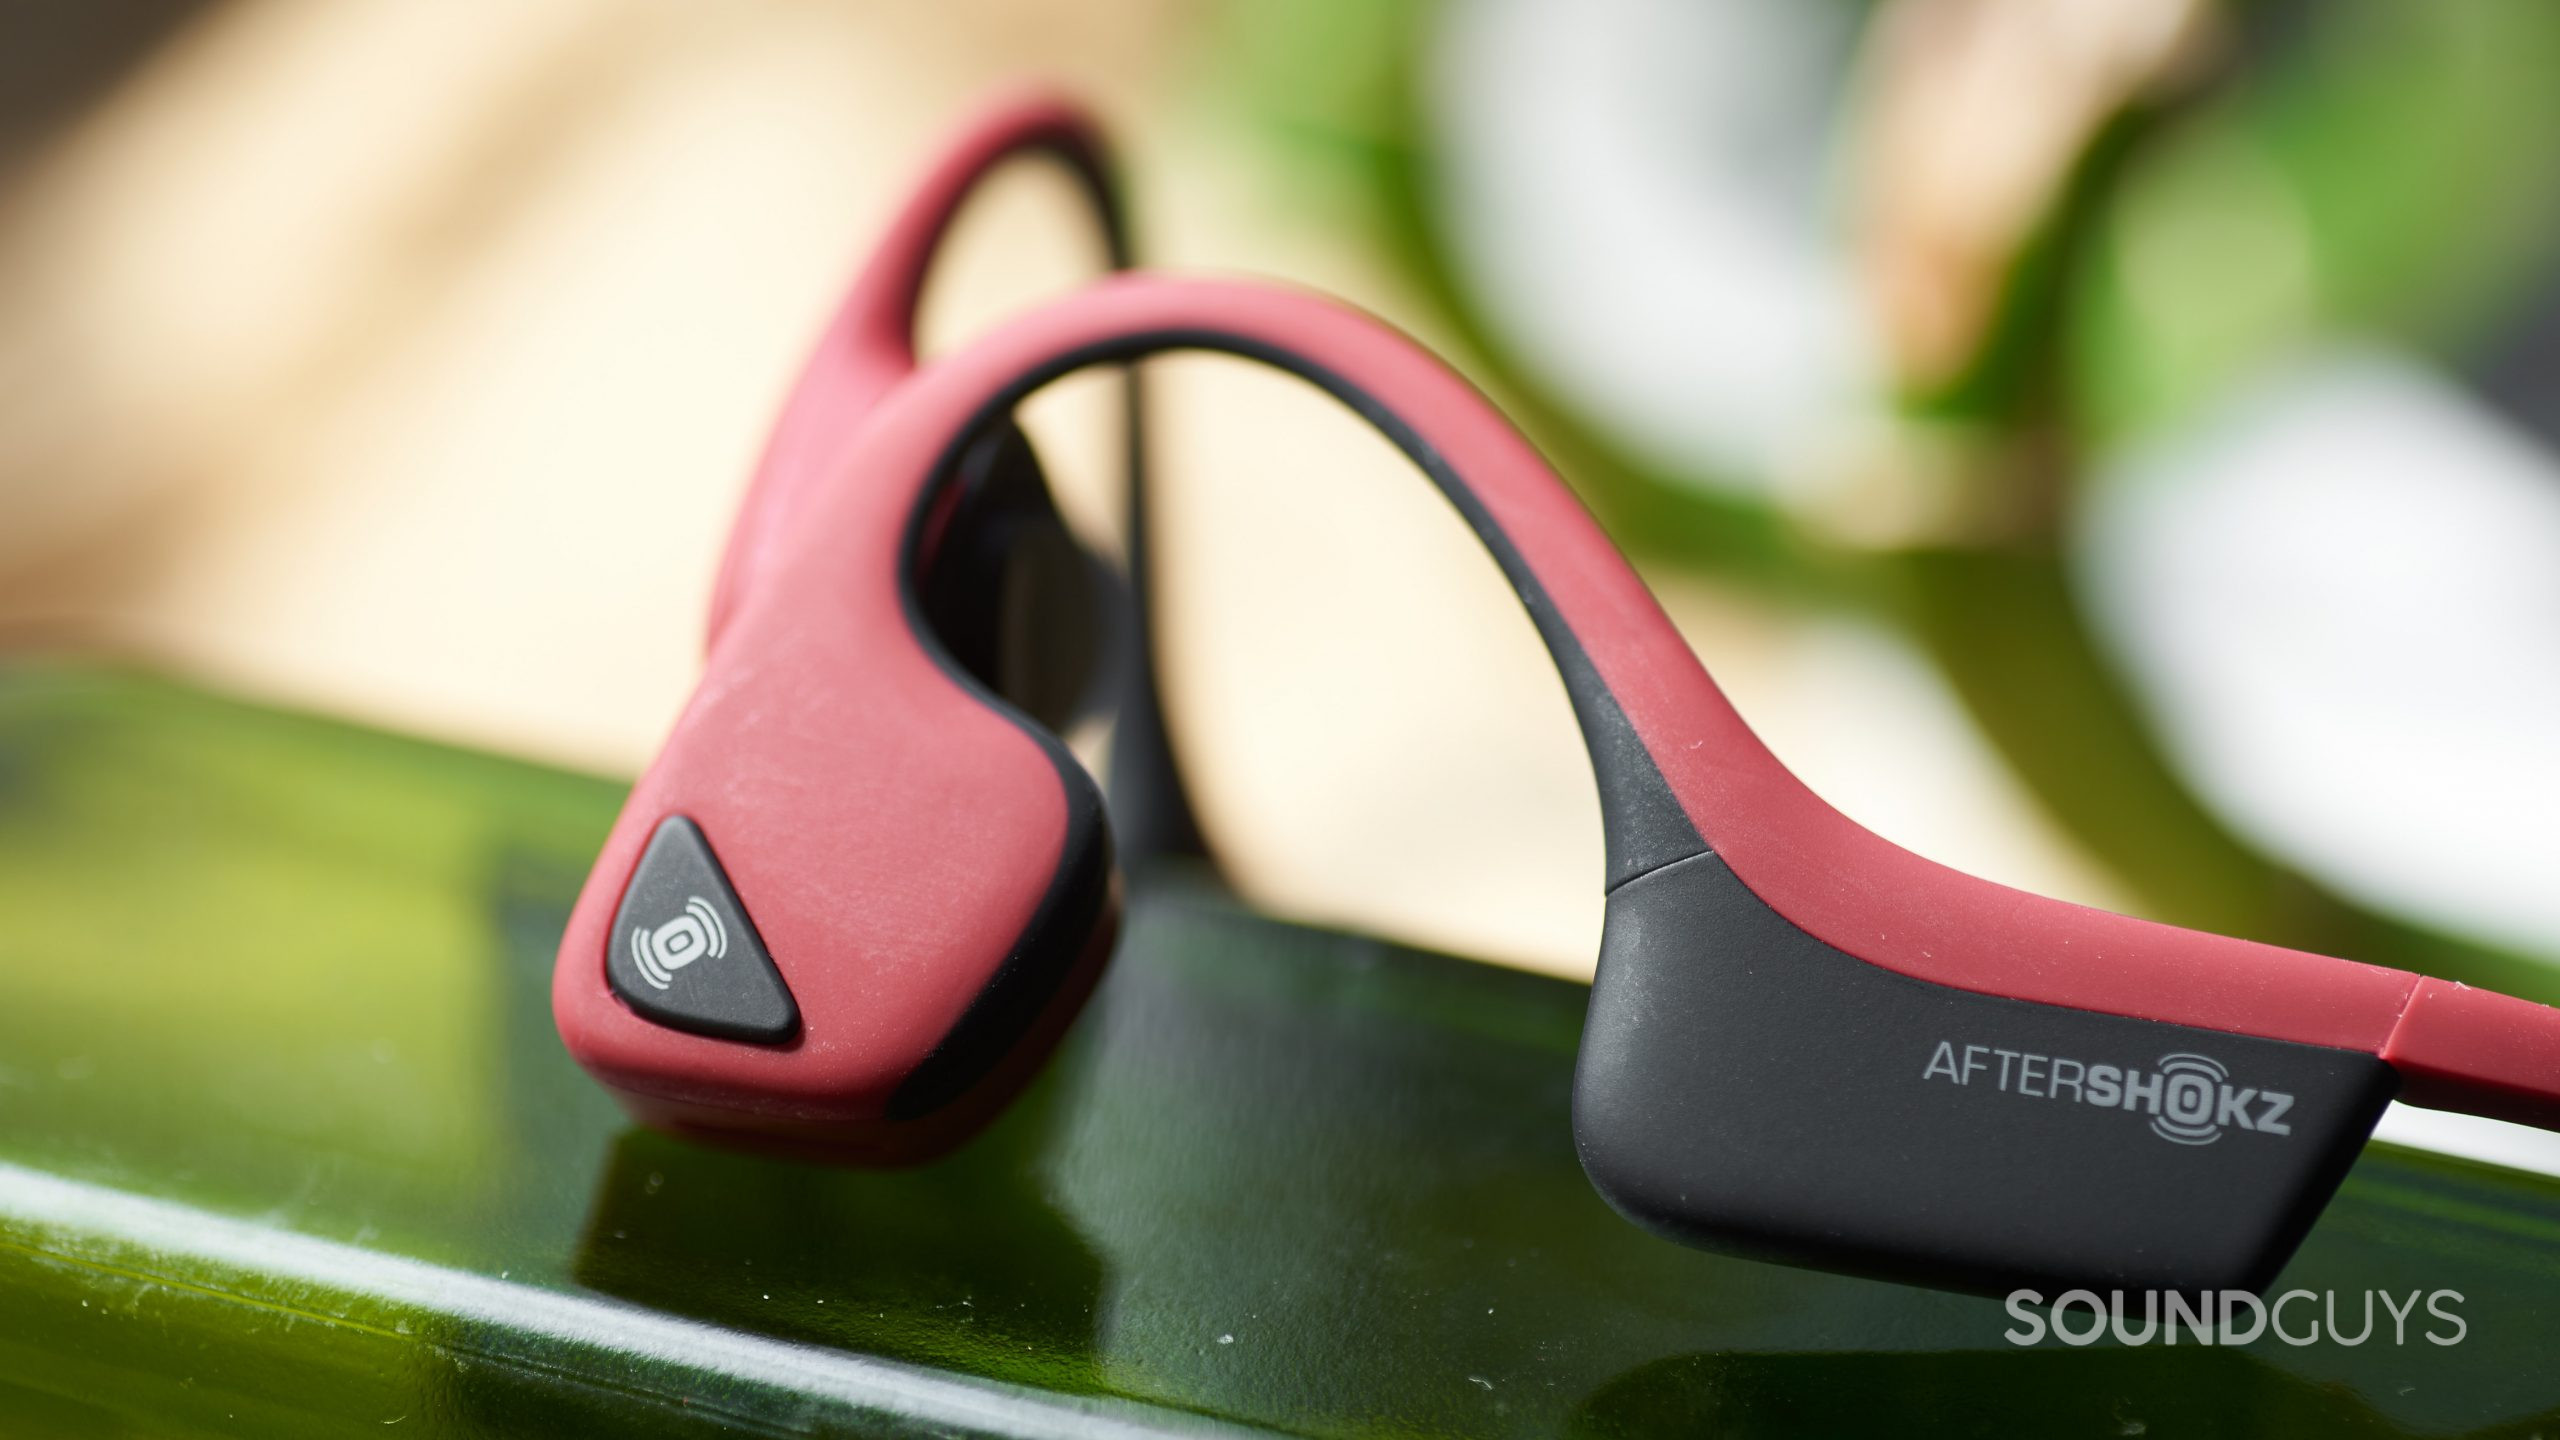 The AfterShokz Air bone conduction headphones' multi-function button.